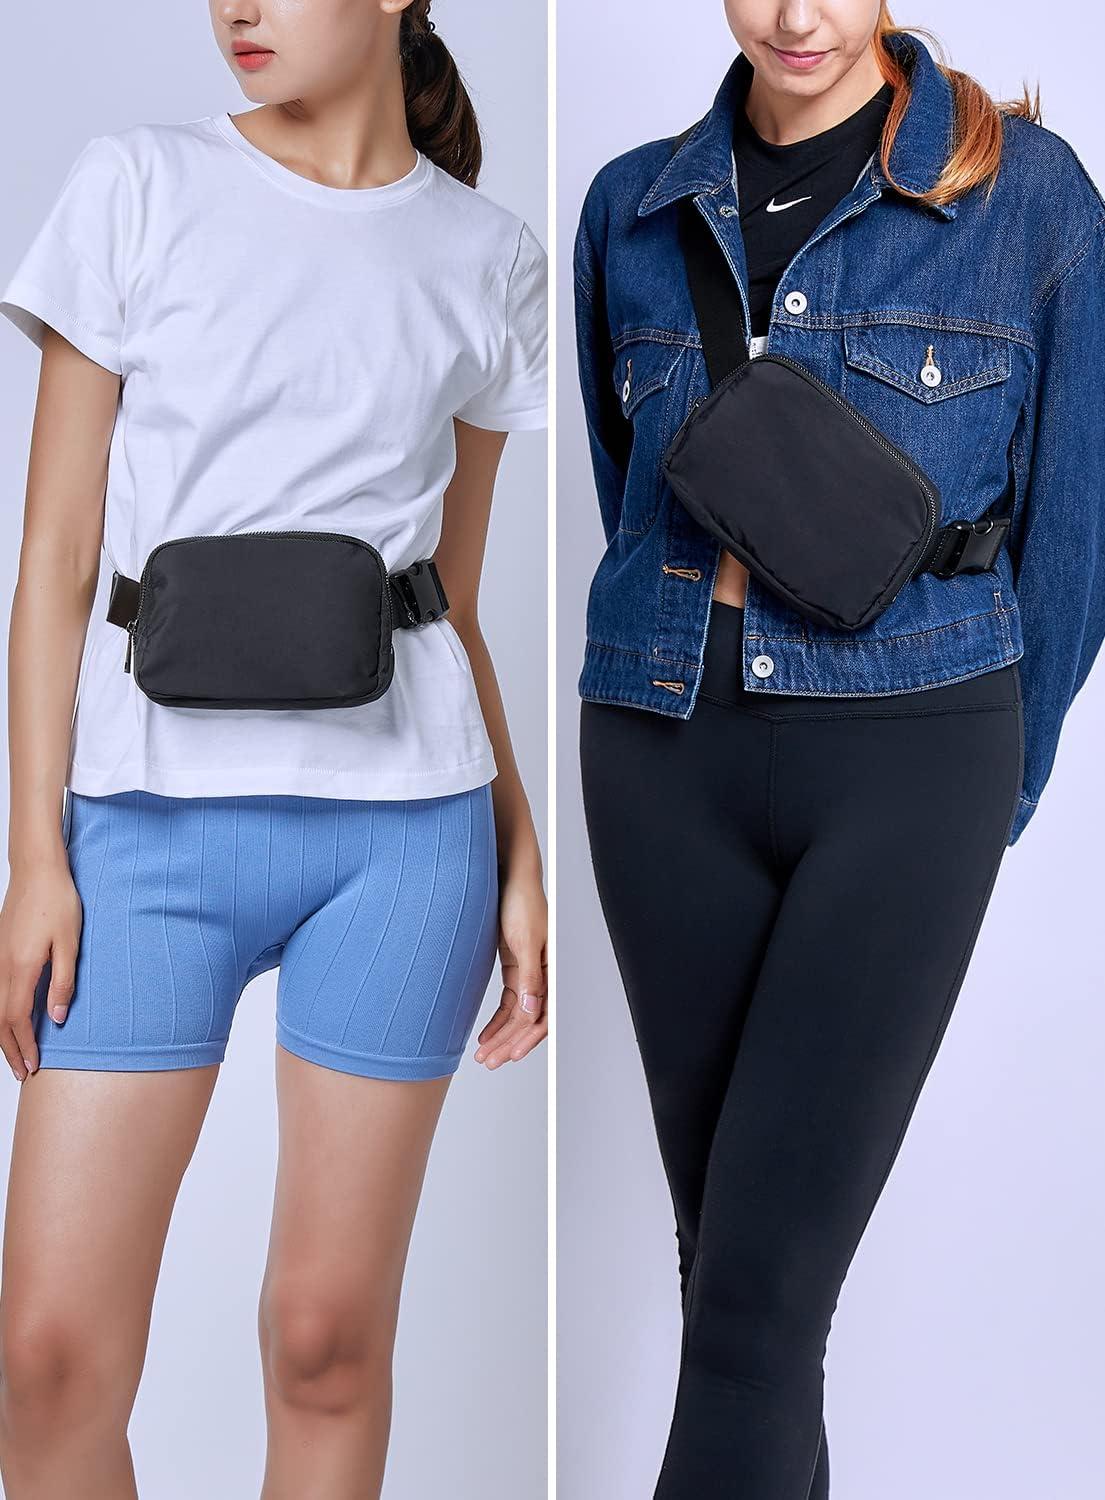 HVJCEZ Belt Bag for Women Men, Fashion Crossbody Fanny Packs Waterproof  Mini Waist Bag Bum Bag with Adjustable Strap for Running, Hiking, Walking  and Travel Black